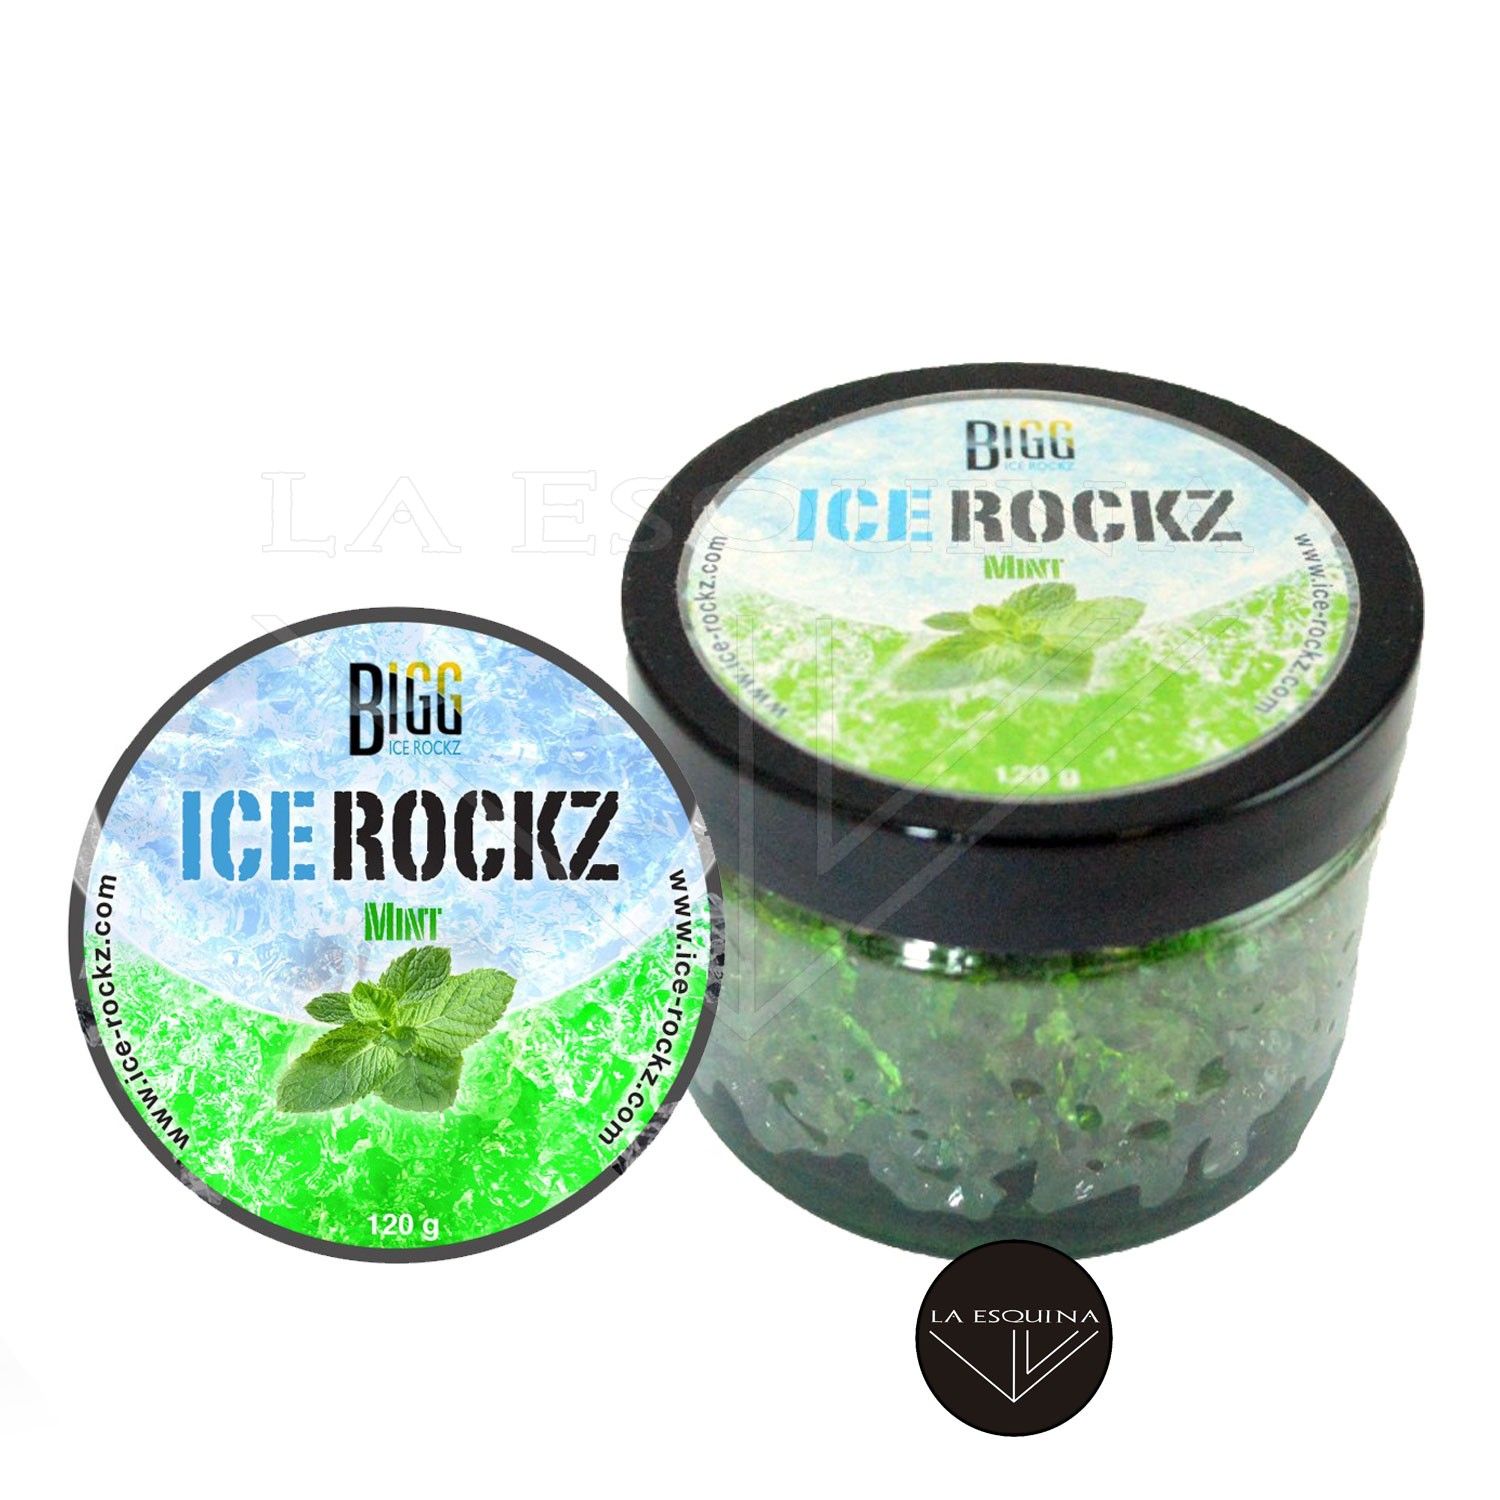 Gel Rock de Cachimba BIGG ICE ROCKZ – 120 g. – Mint